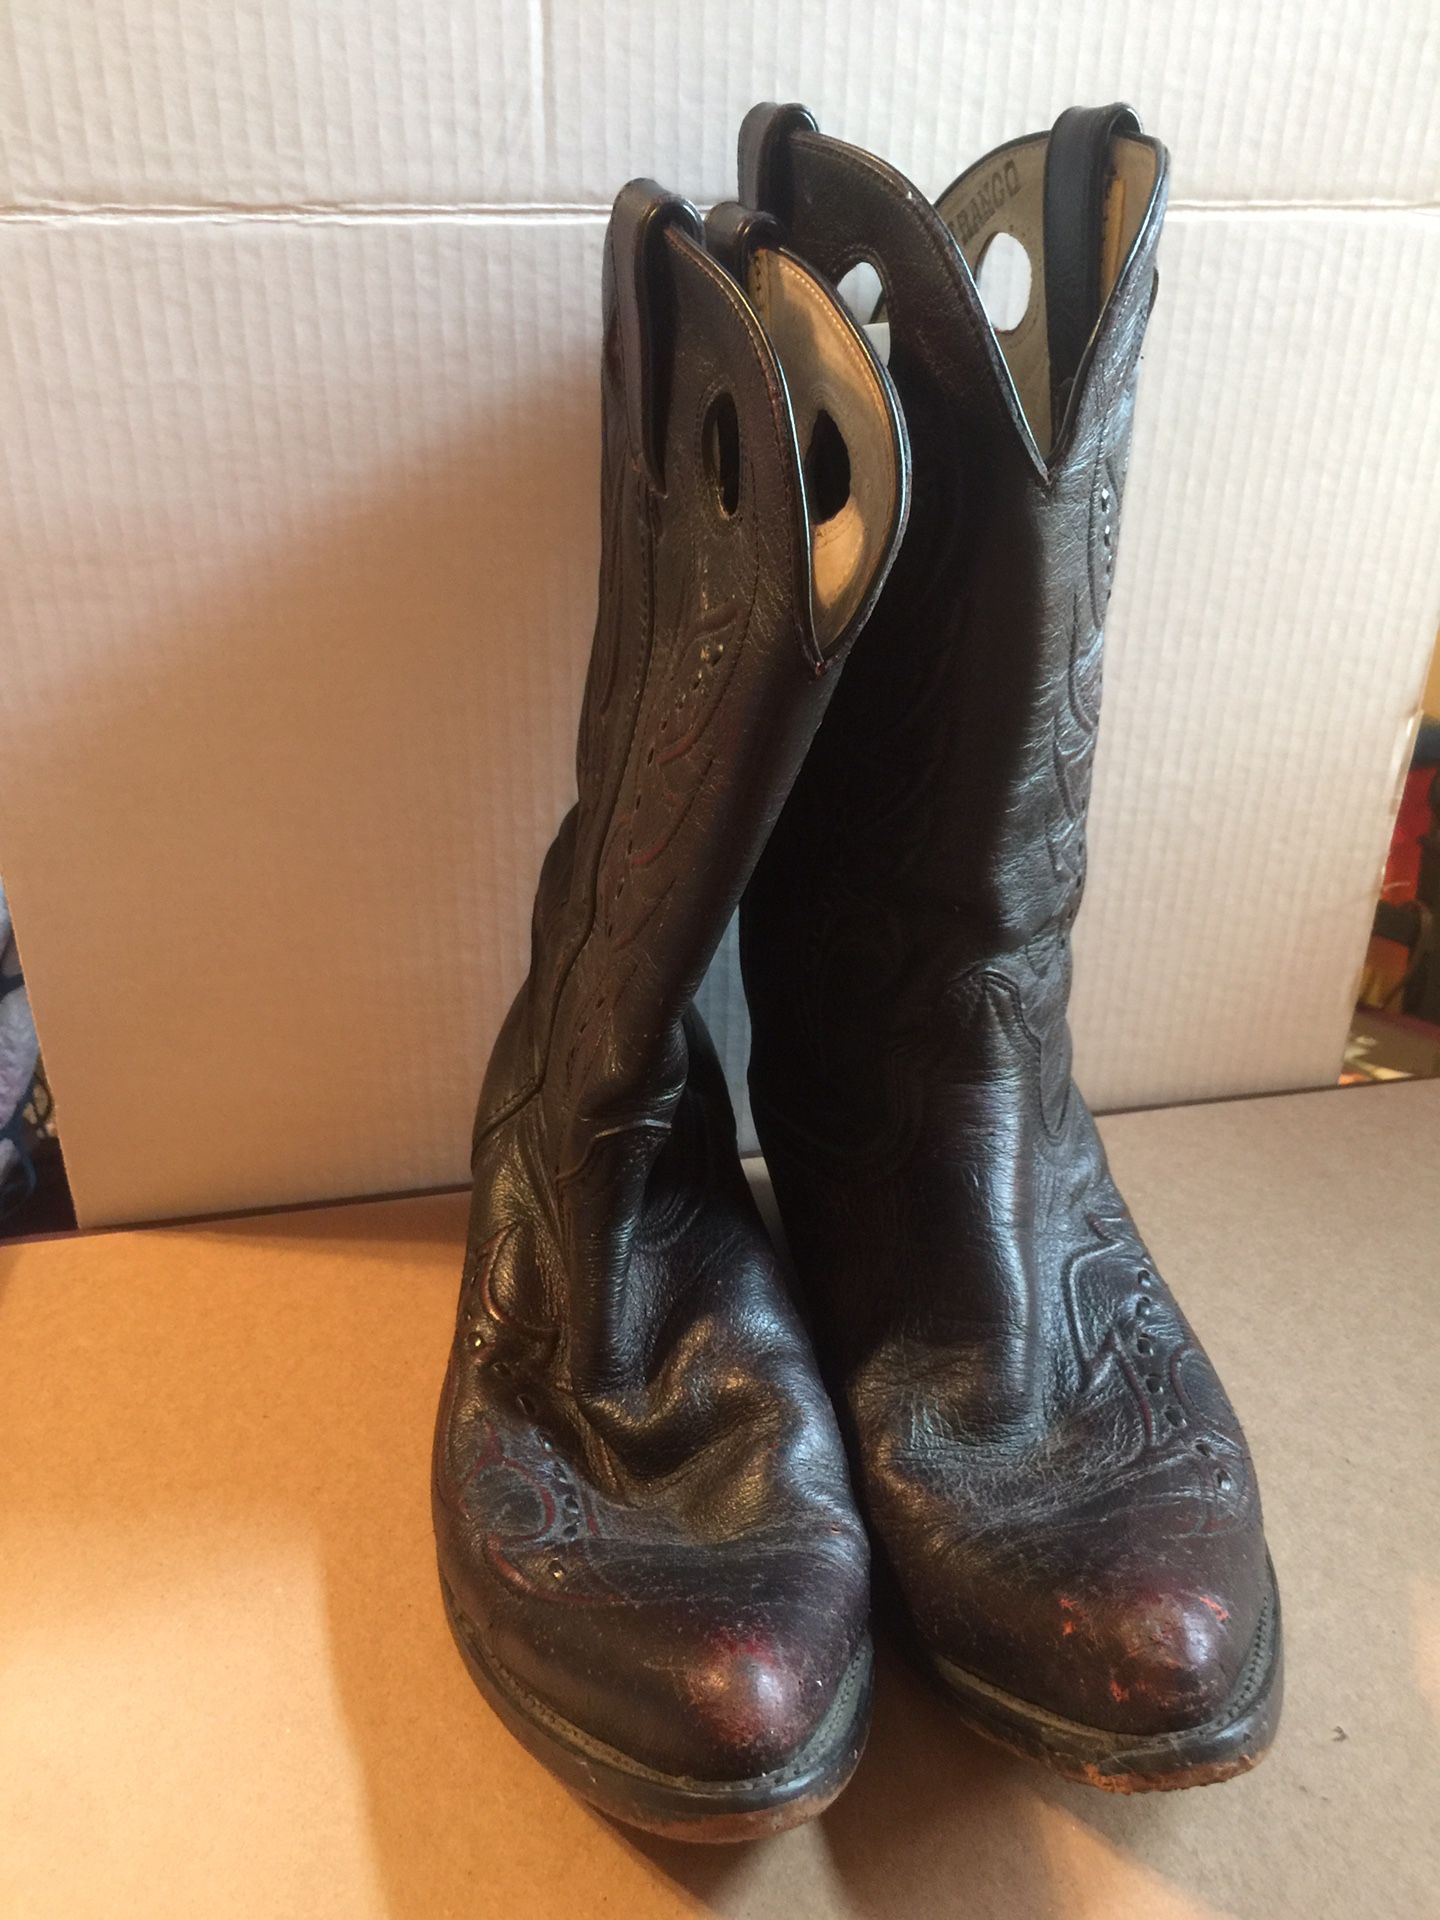 Durango Cowboy Boots size 10.5